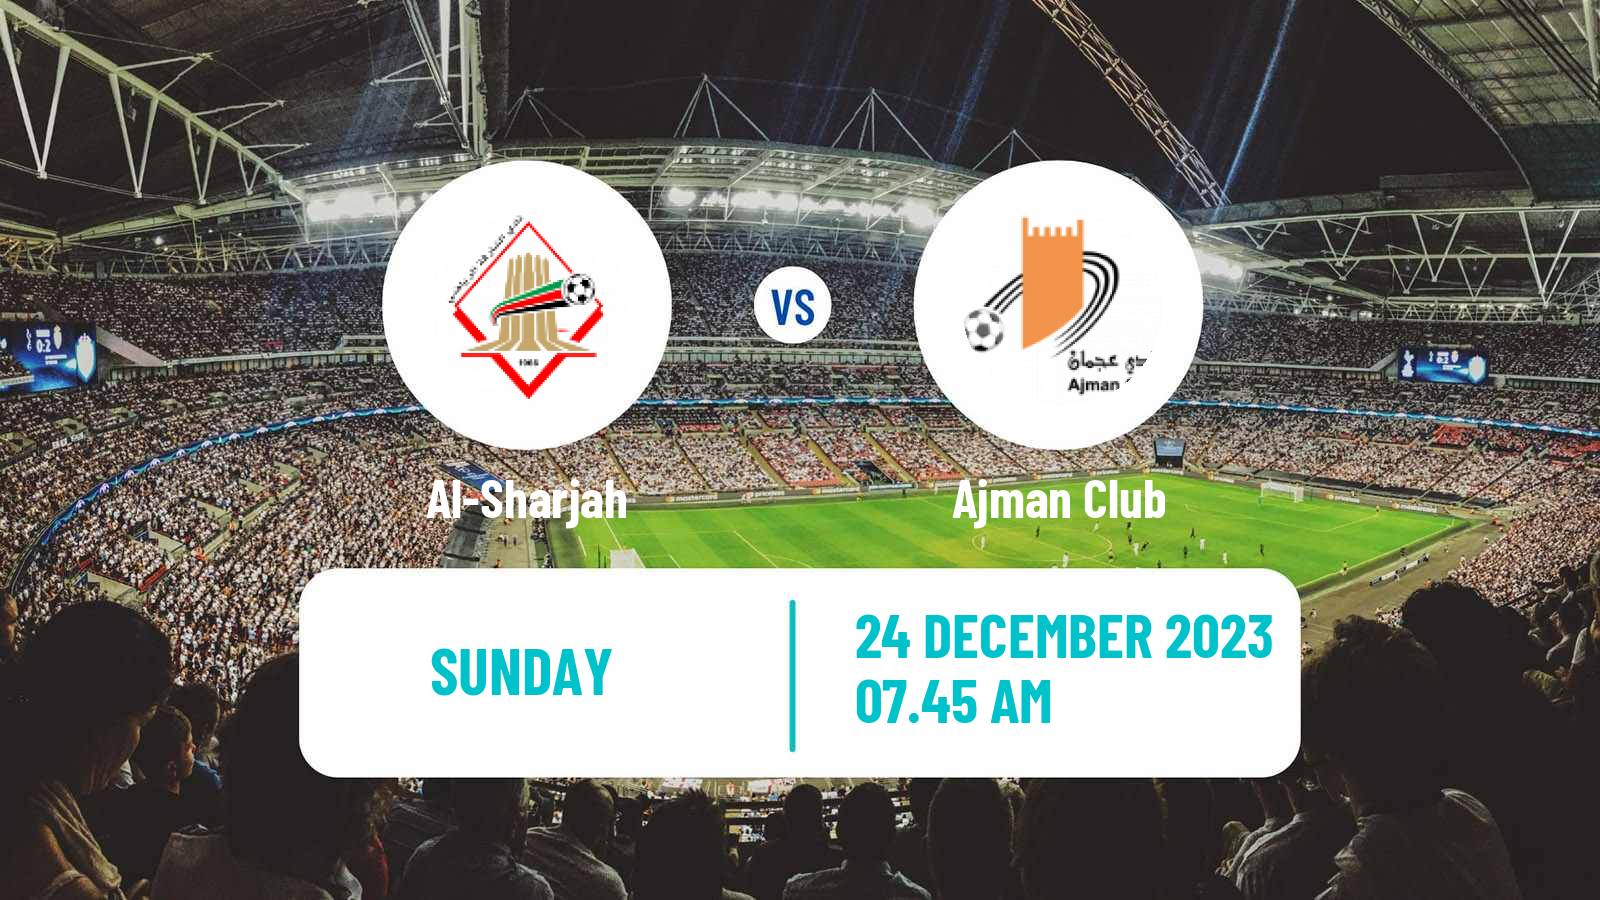 Soccer UAE Football League Al-Sharjah - Ajman Club